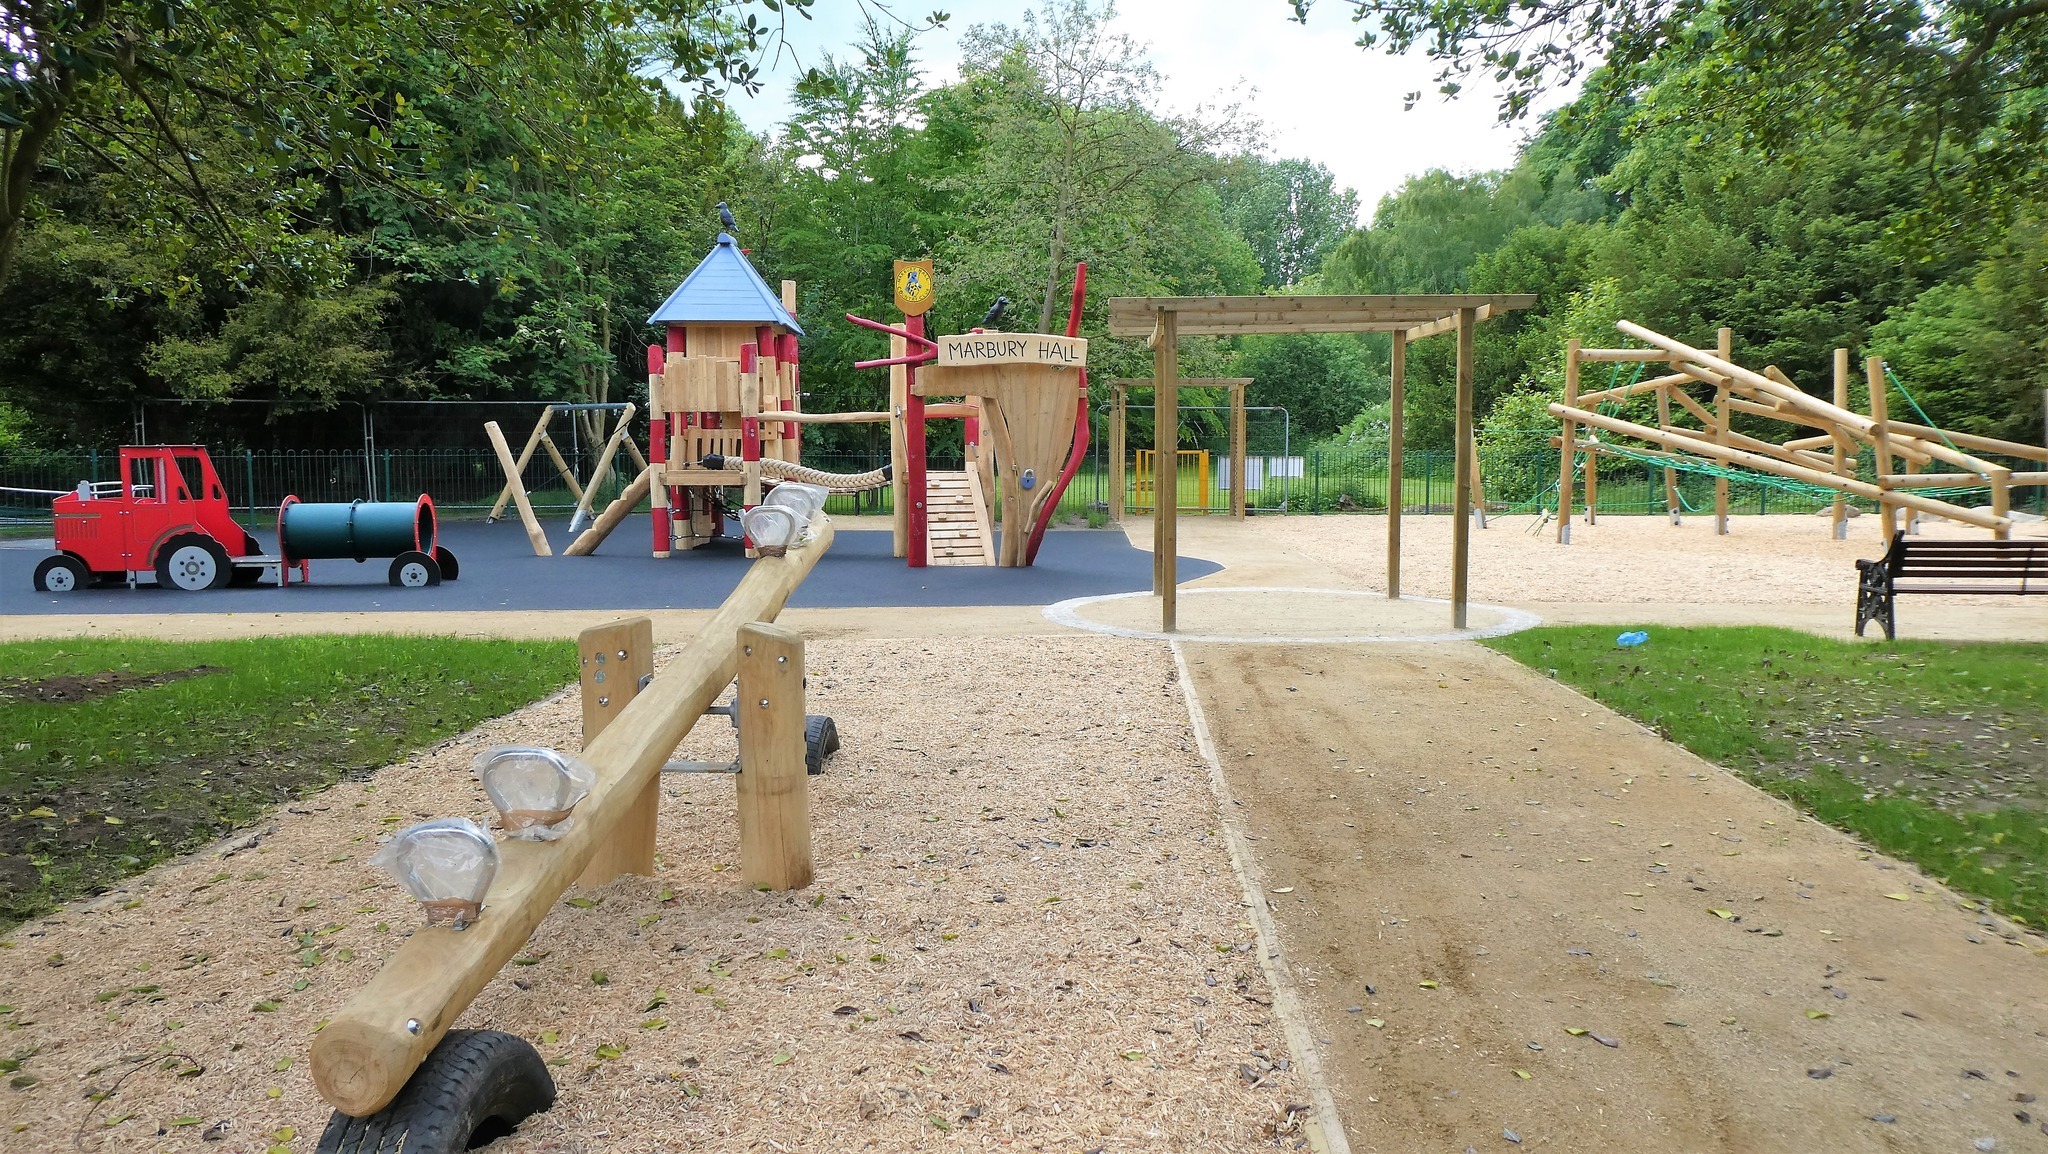 New Marbury Park play area by Lynne Bentley